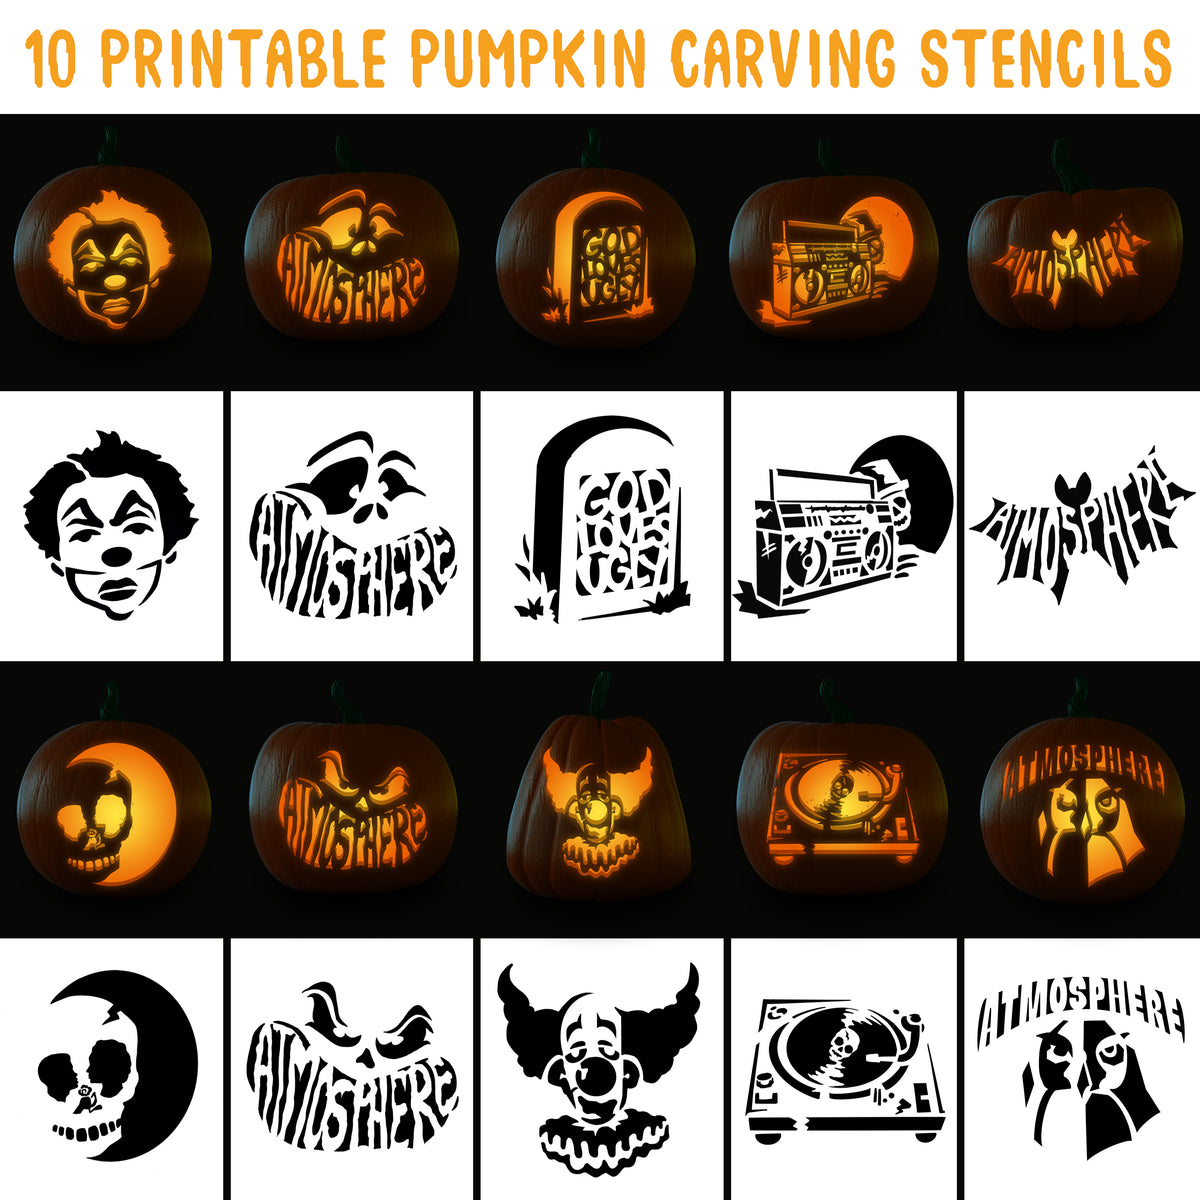 50 Printable Pumpkin Carving Stencils To Use as Templates - Parade